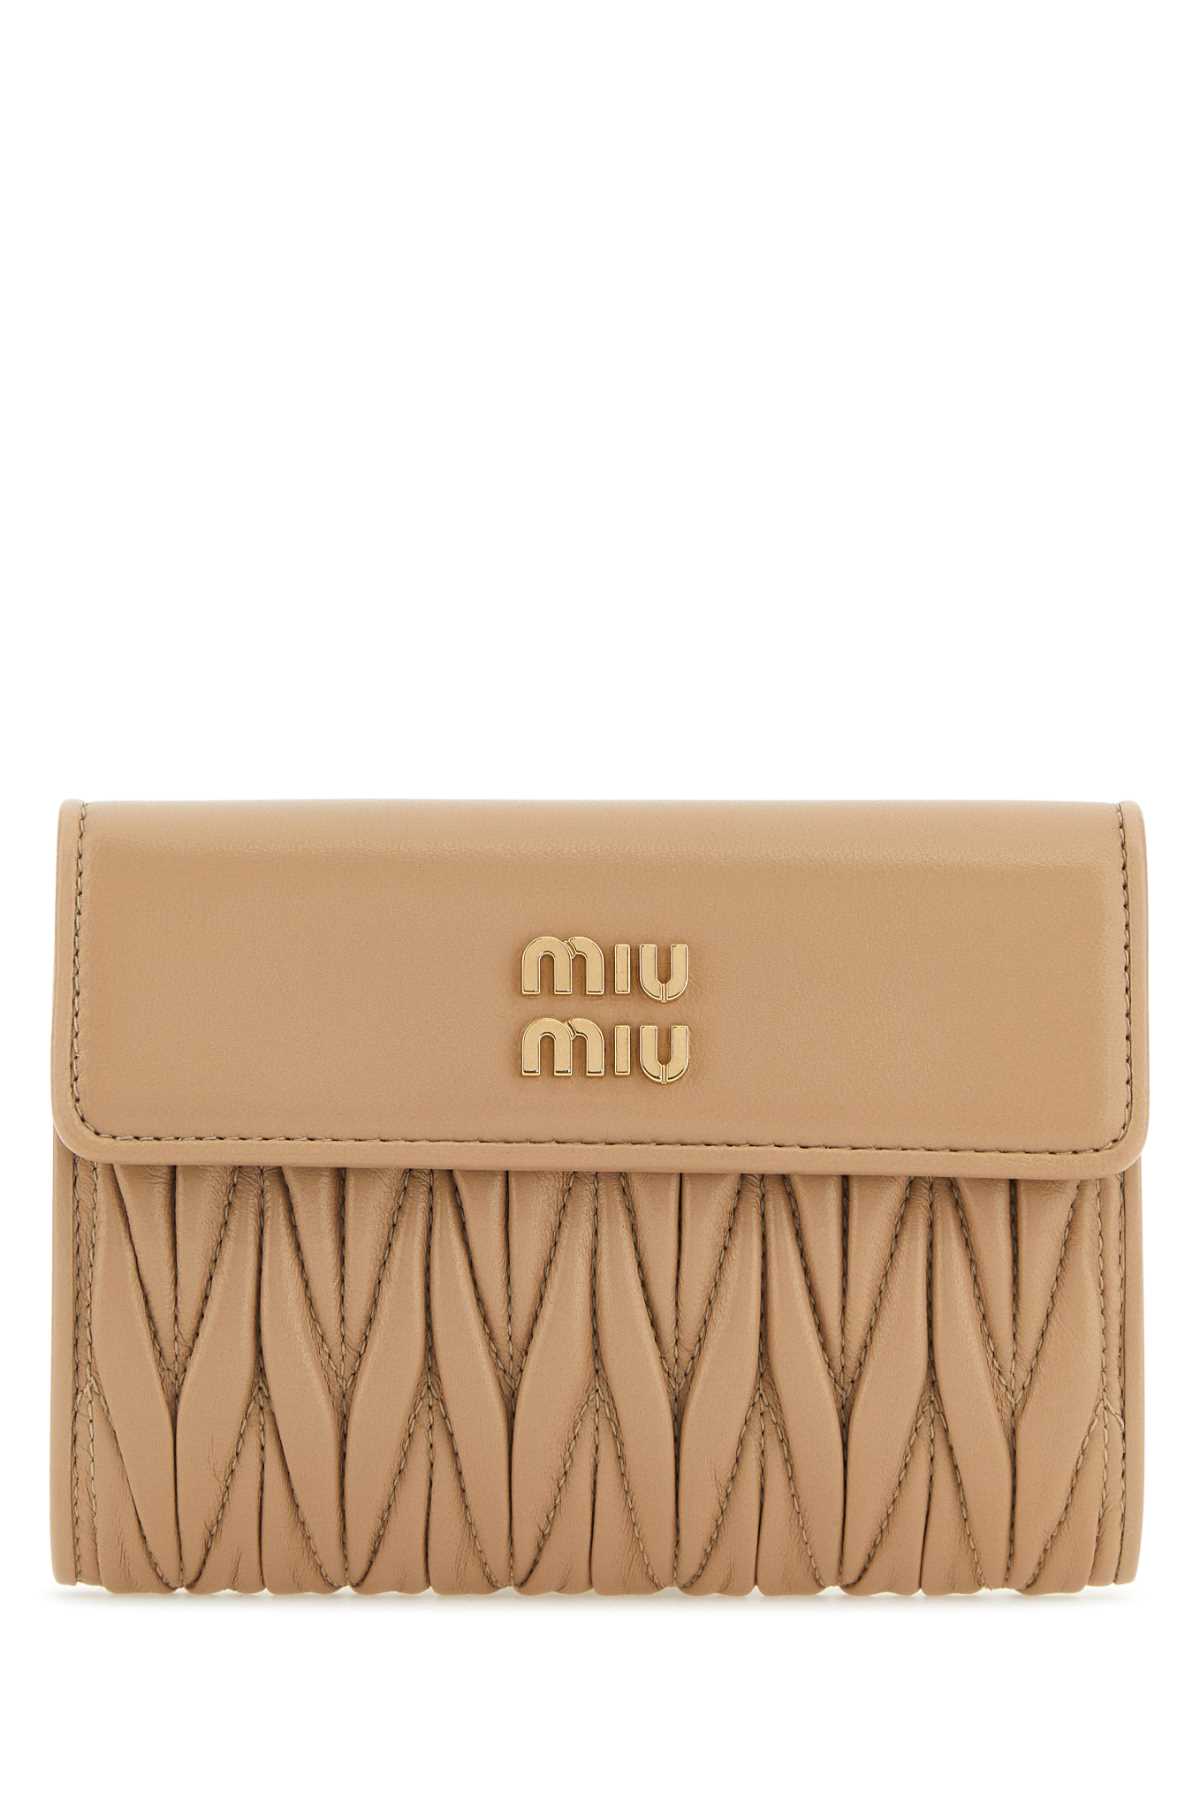 Shop Miu Miu Sand Nappa Leather Wallet In Sabbia